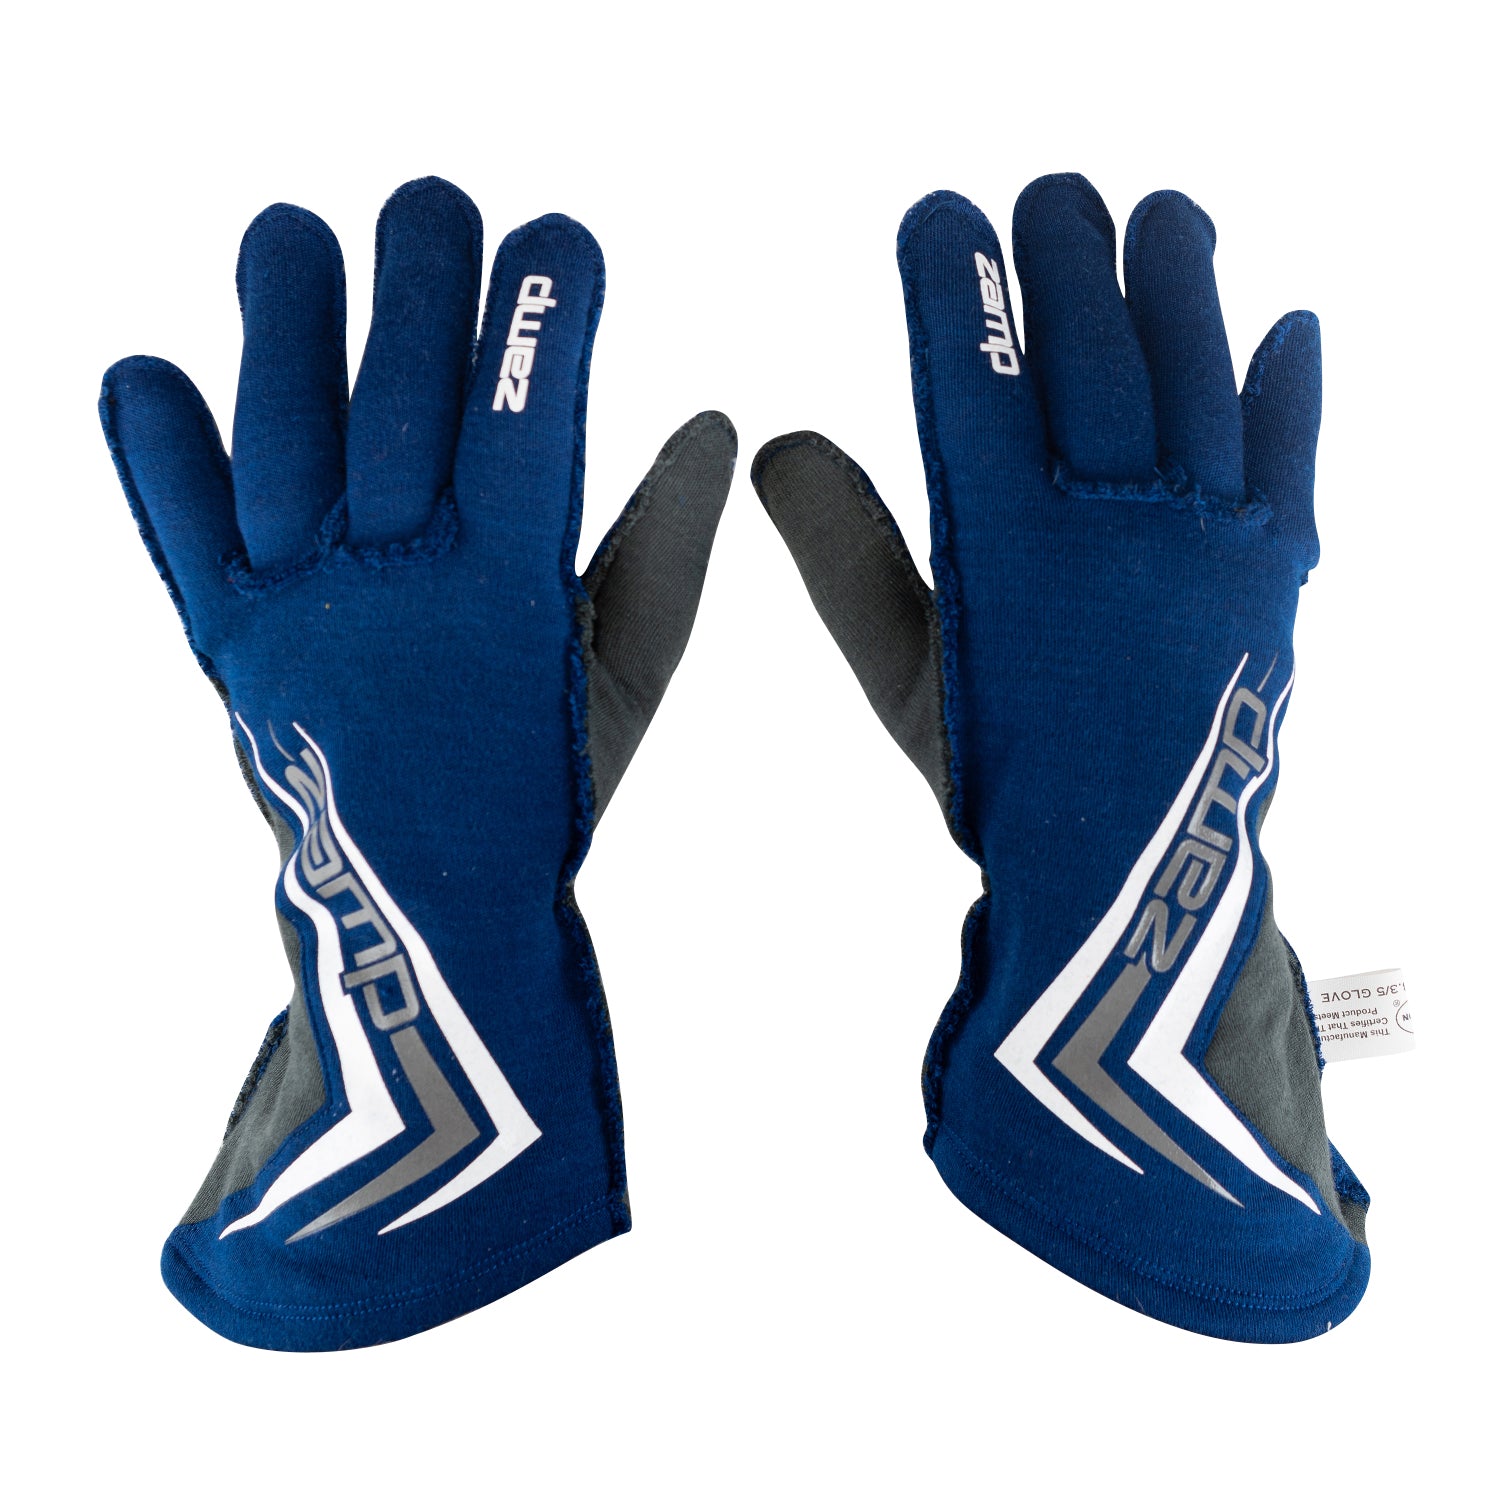 ZAMP Racing ZR-60 Race Gloves Blue RG20003XL